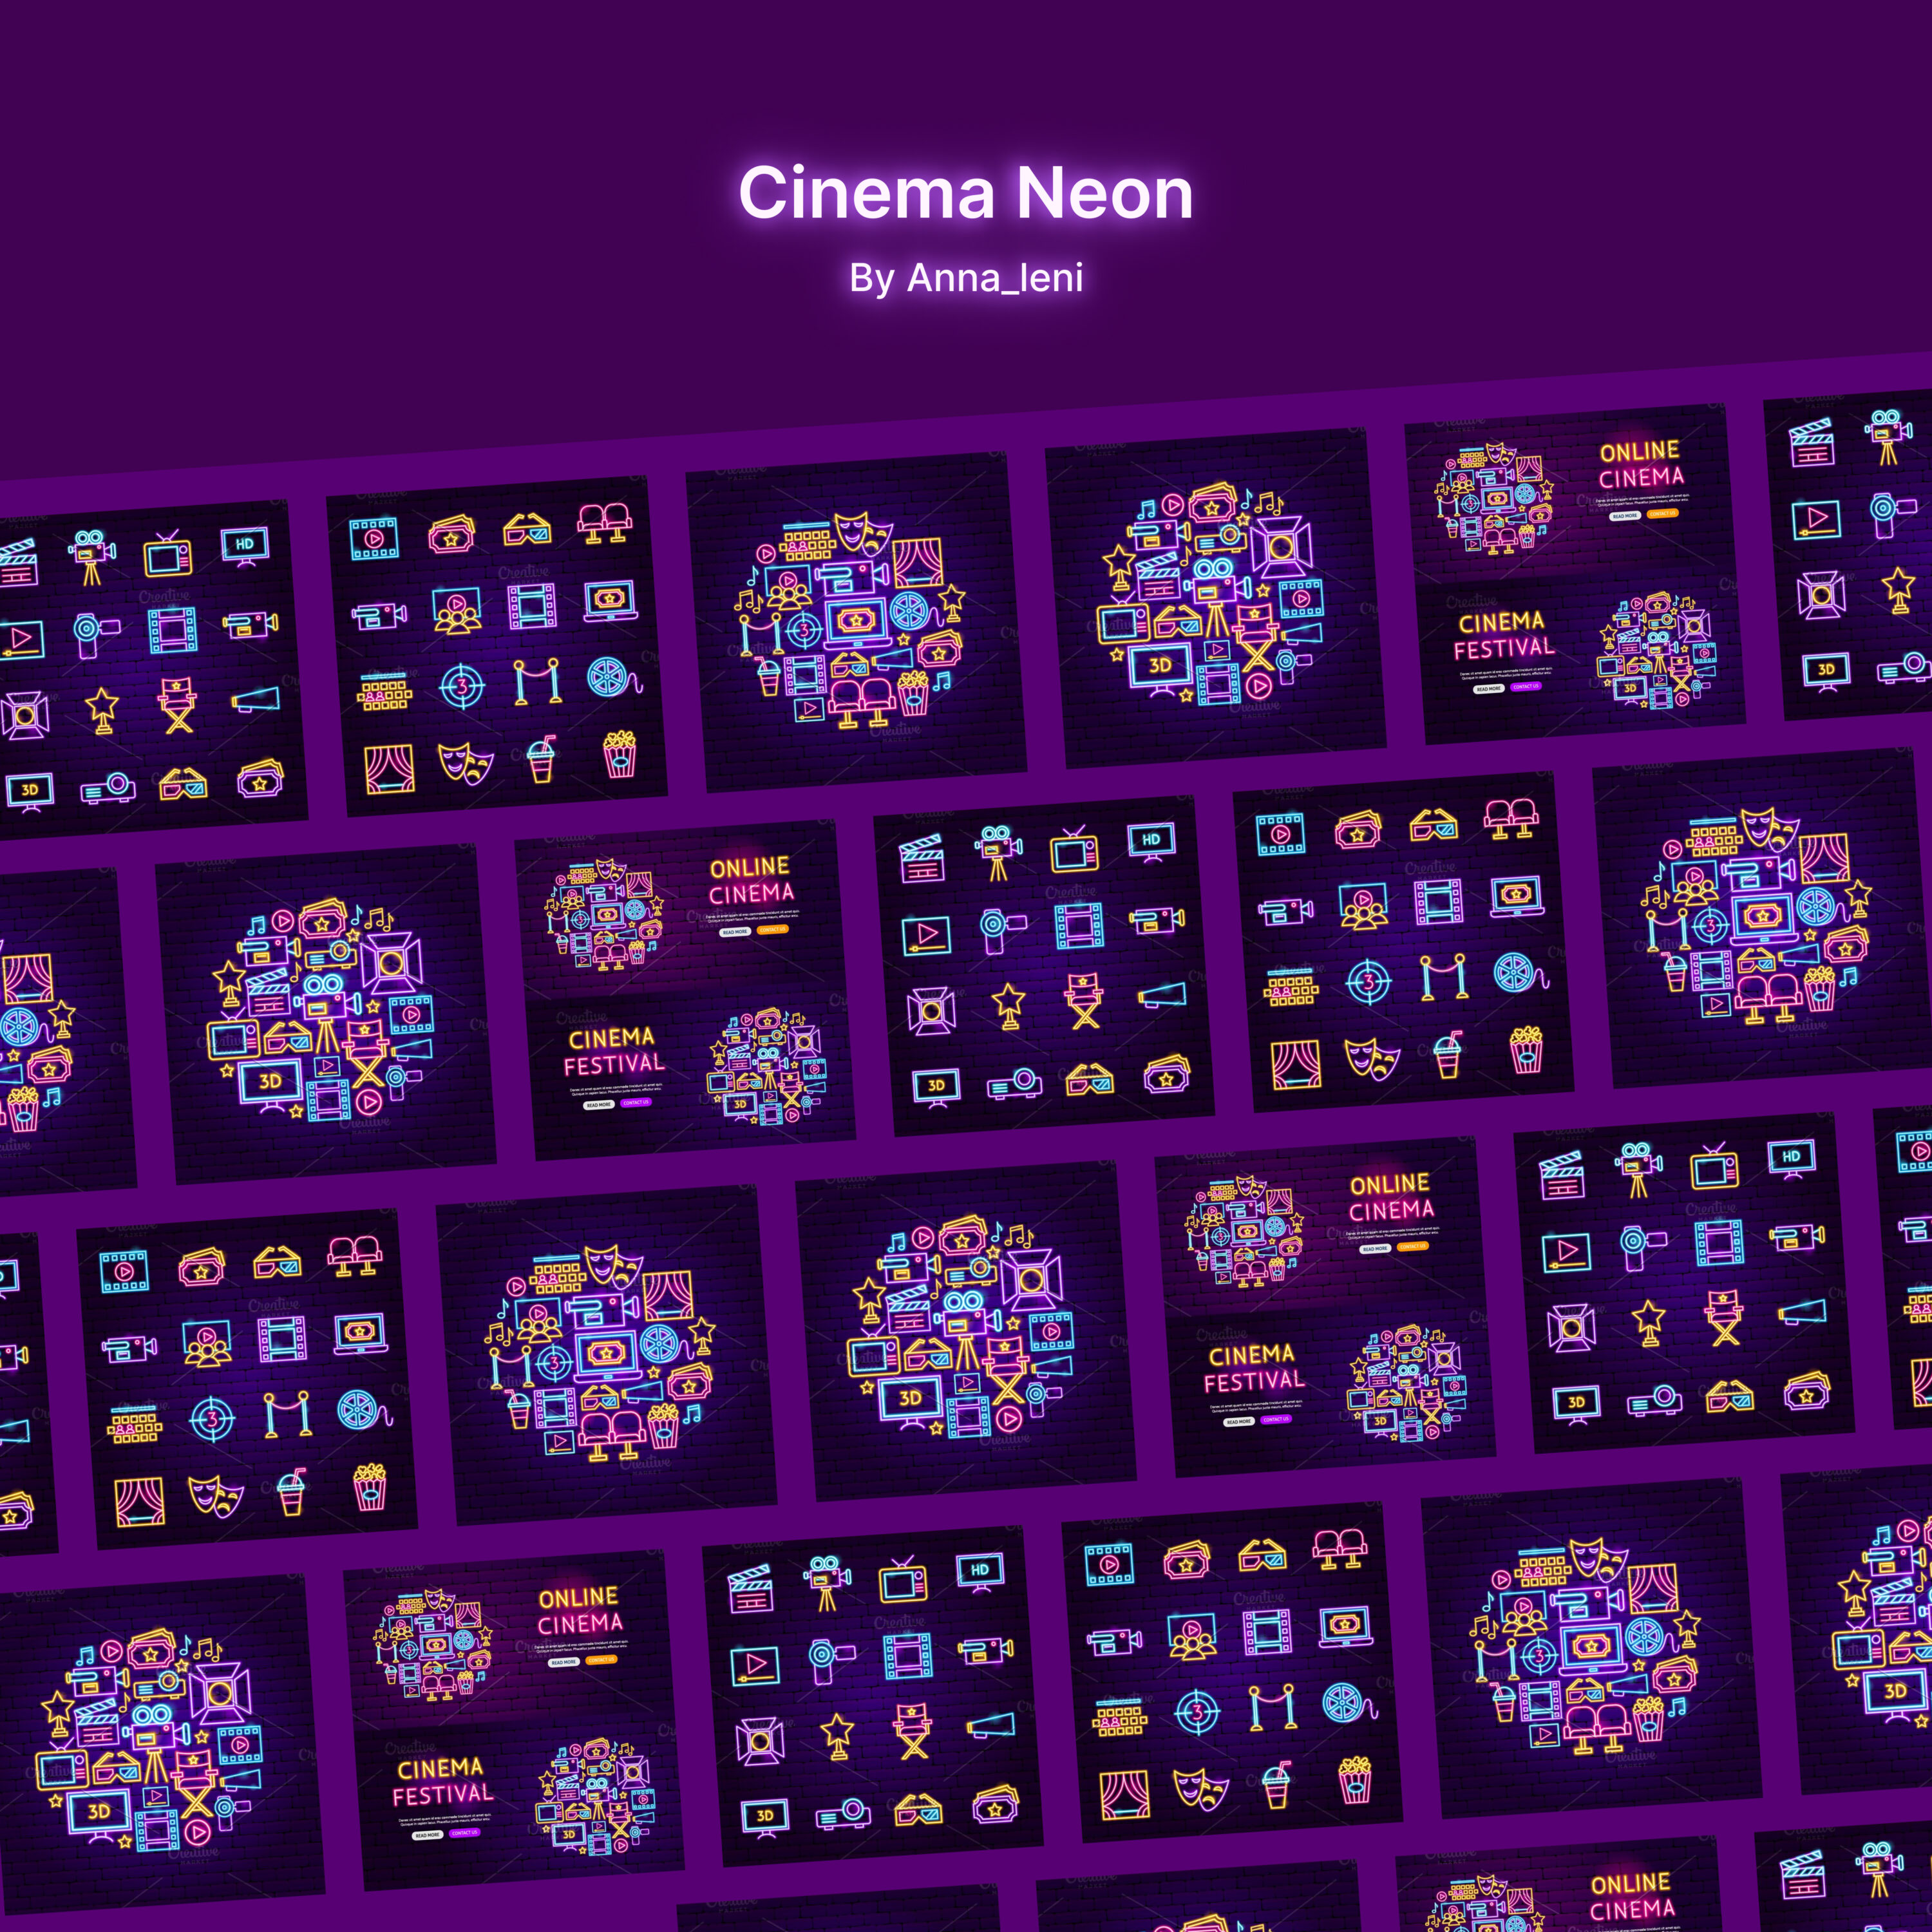 Cinema neon image preview.